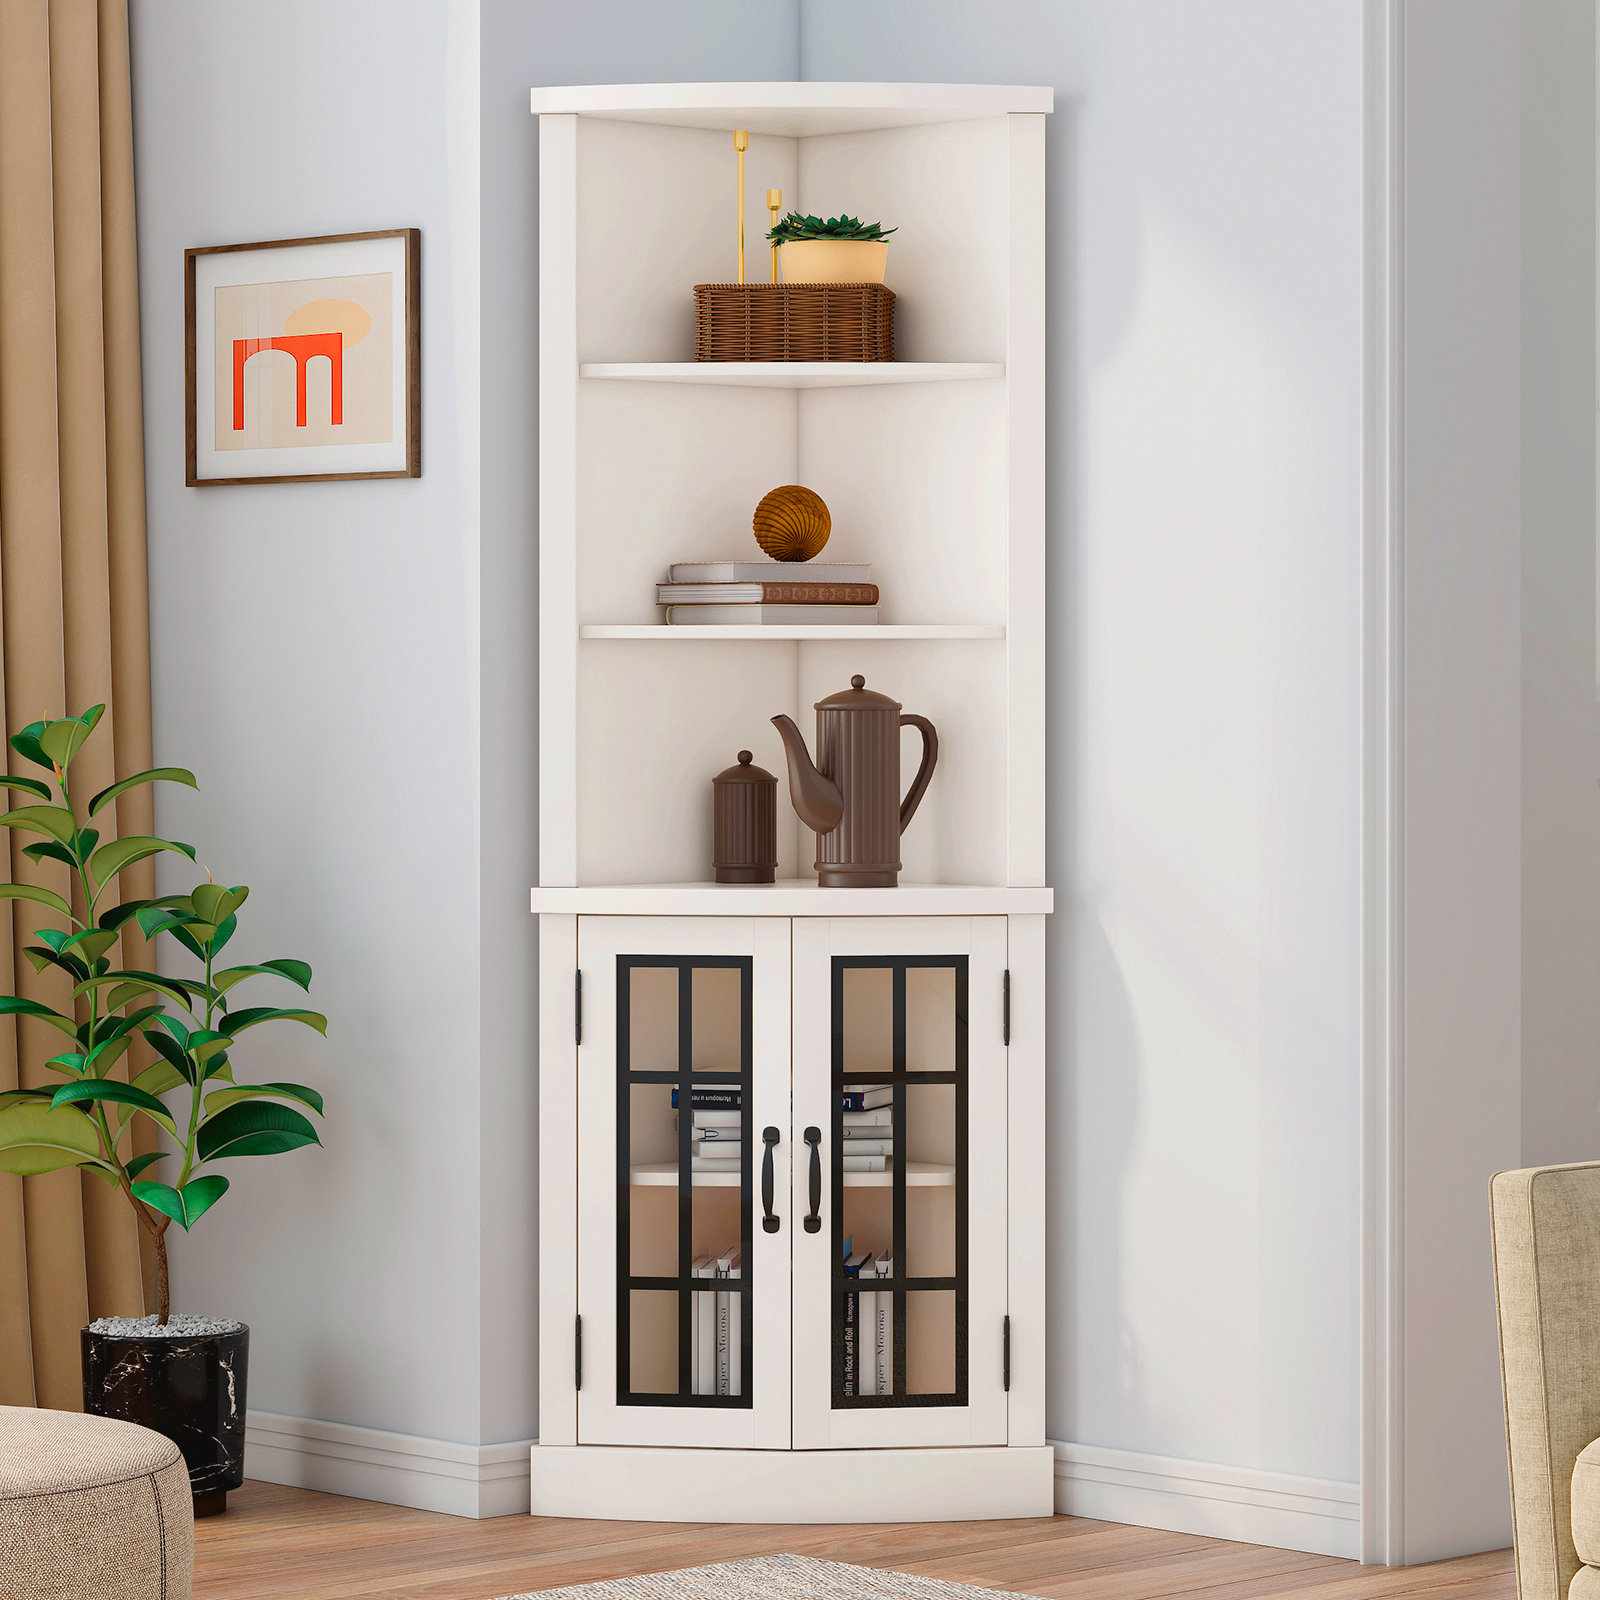 Kechi Corner Shelf Corner Bookcase with 5 Tier Storage Shelves for Bedroom, Living Room Latitude Run Color: Rustic Brown